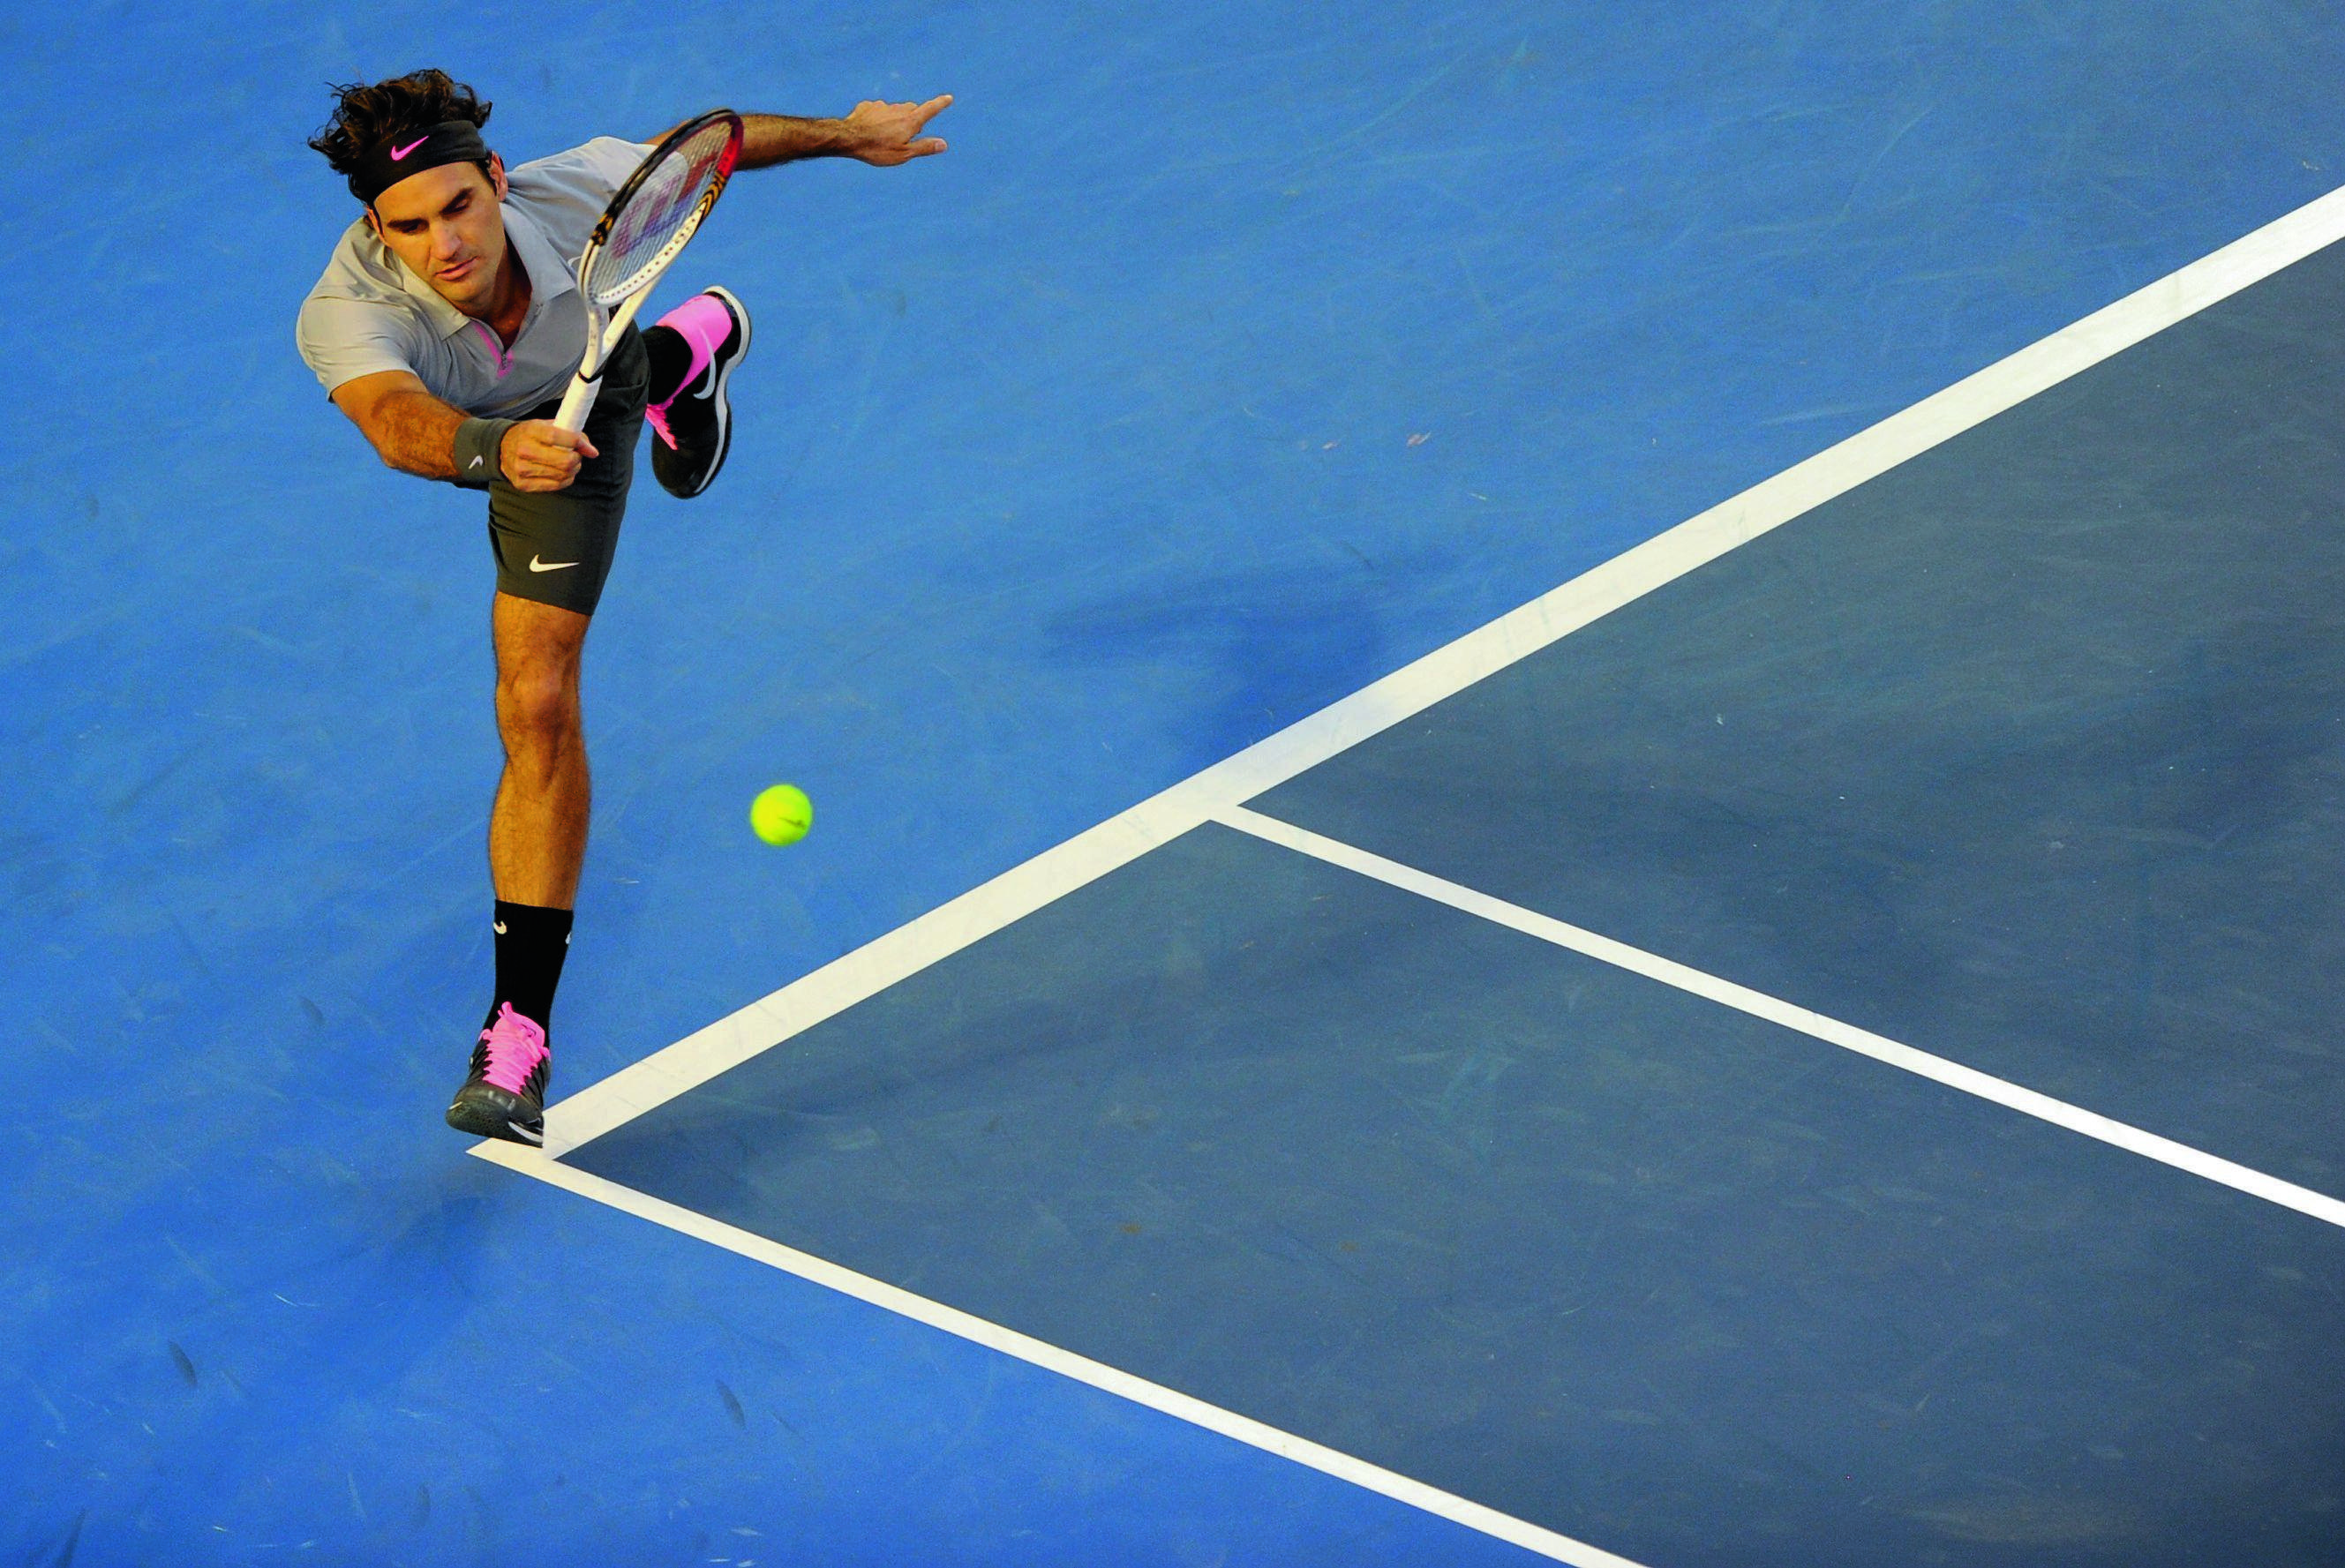 Tennis Super Star Roger Federer HD Wallpaper